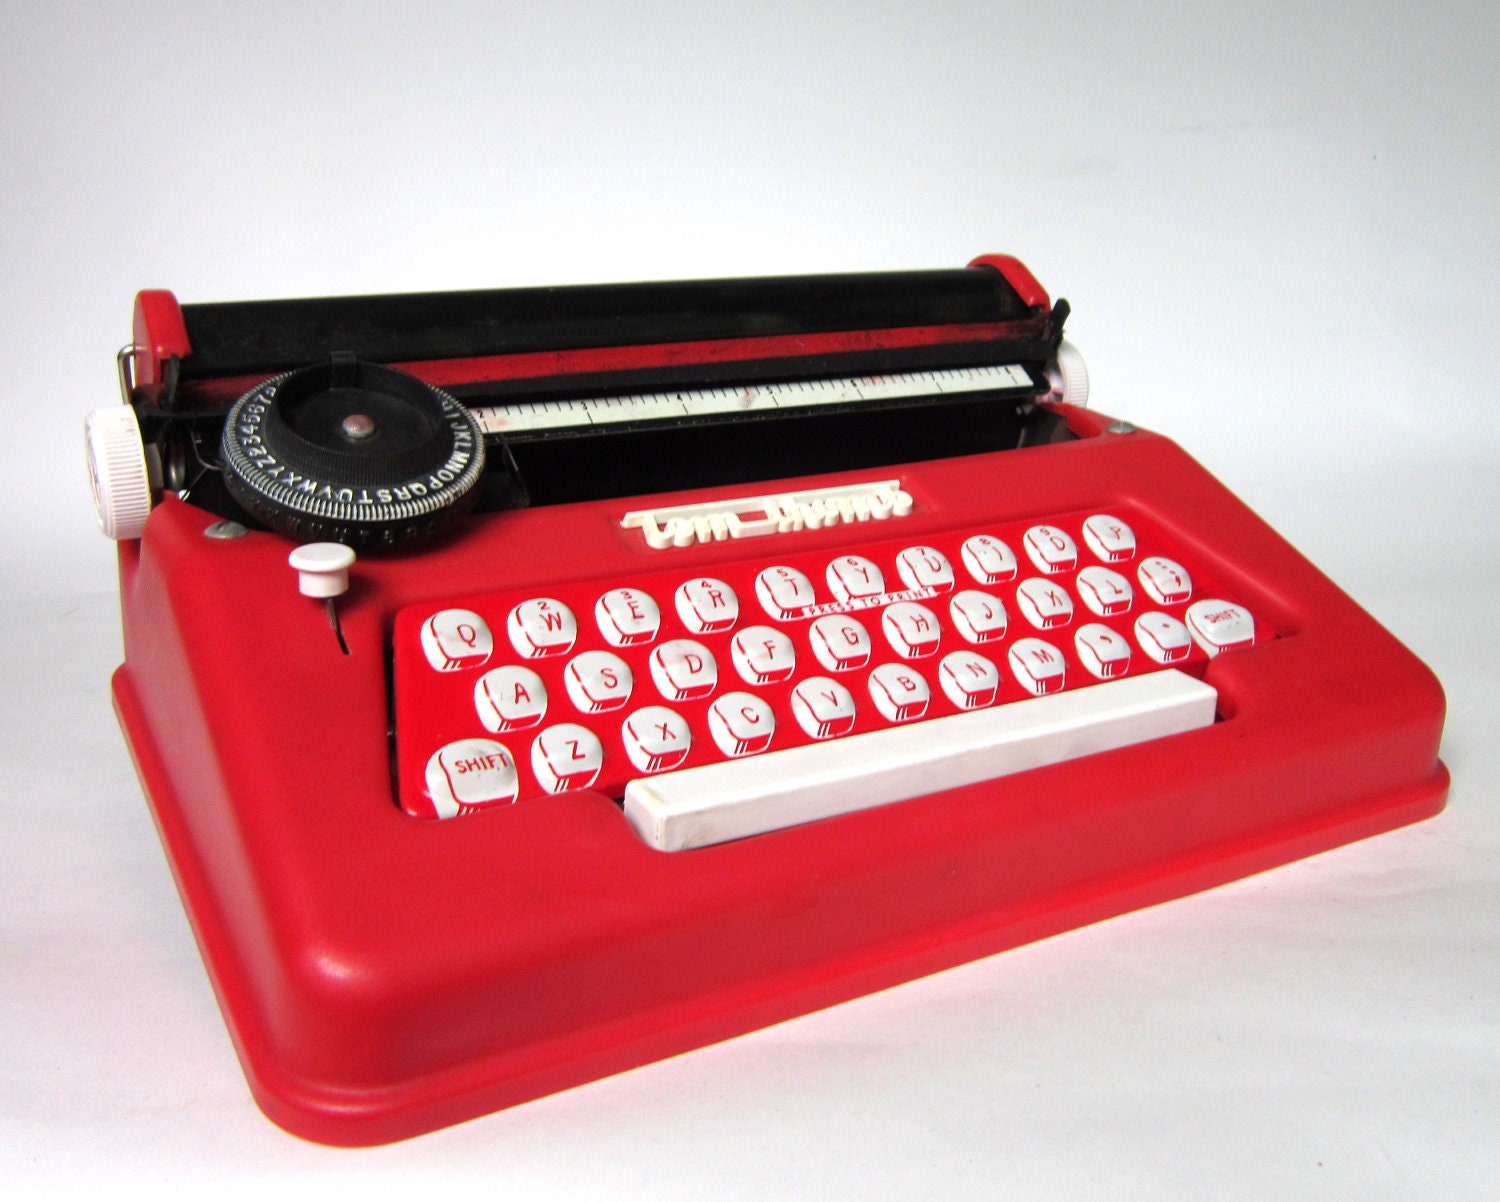 Vintage 1960s Tom Thumb Junior Typewriter - Bright Red with Original Box